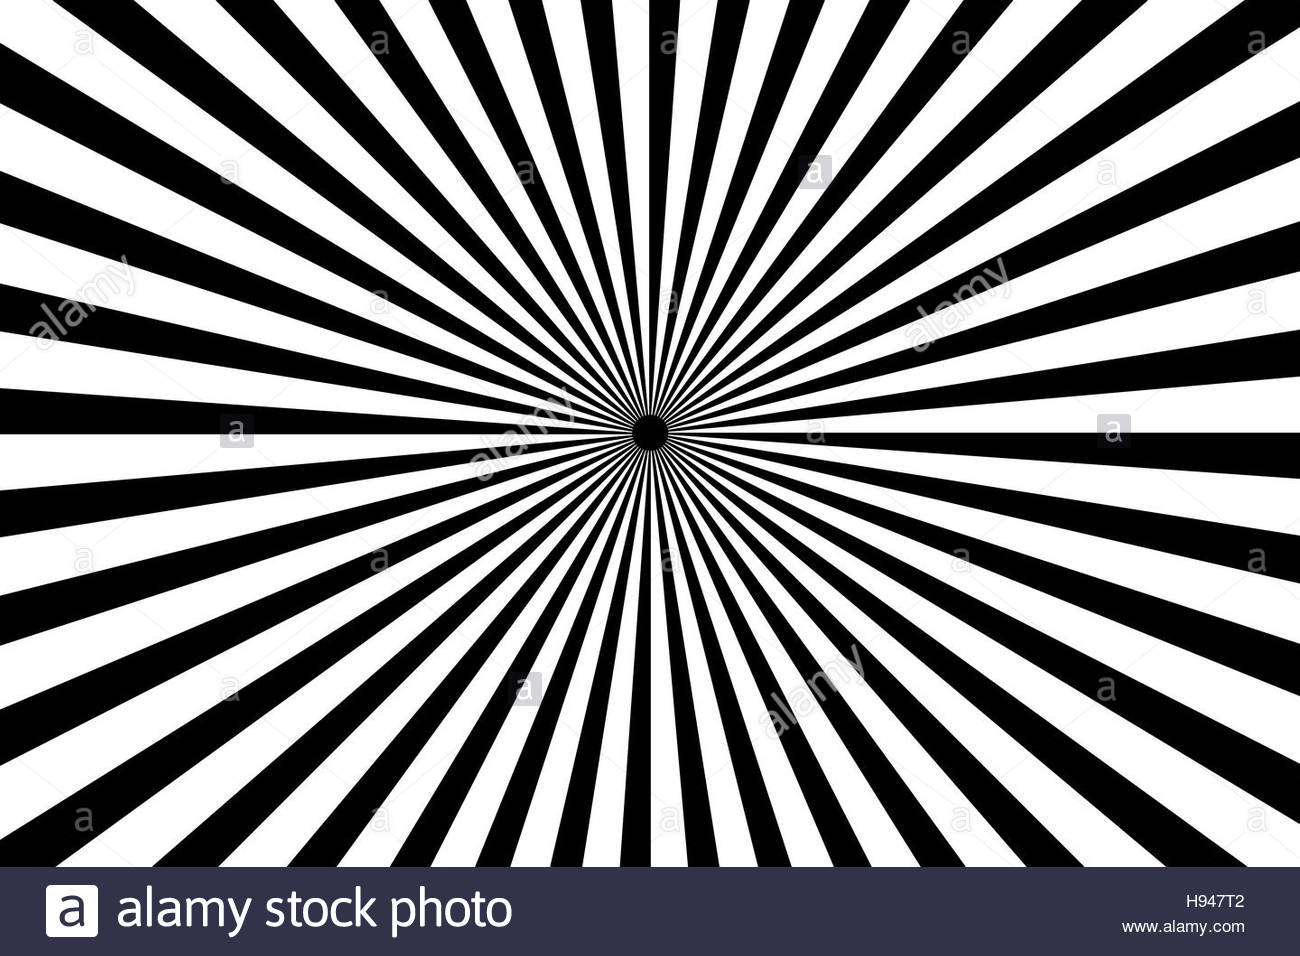 Radiating Black And White Line Background Stock Photo